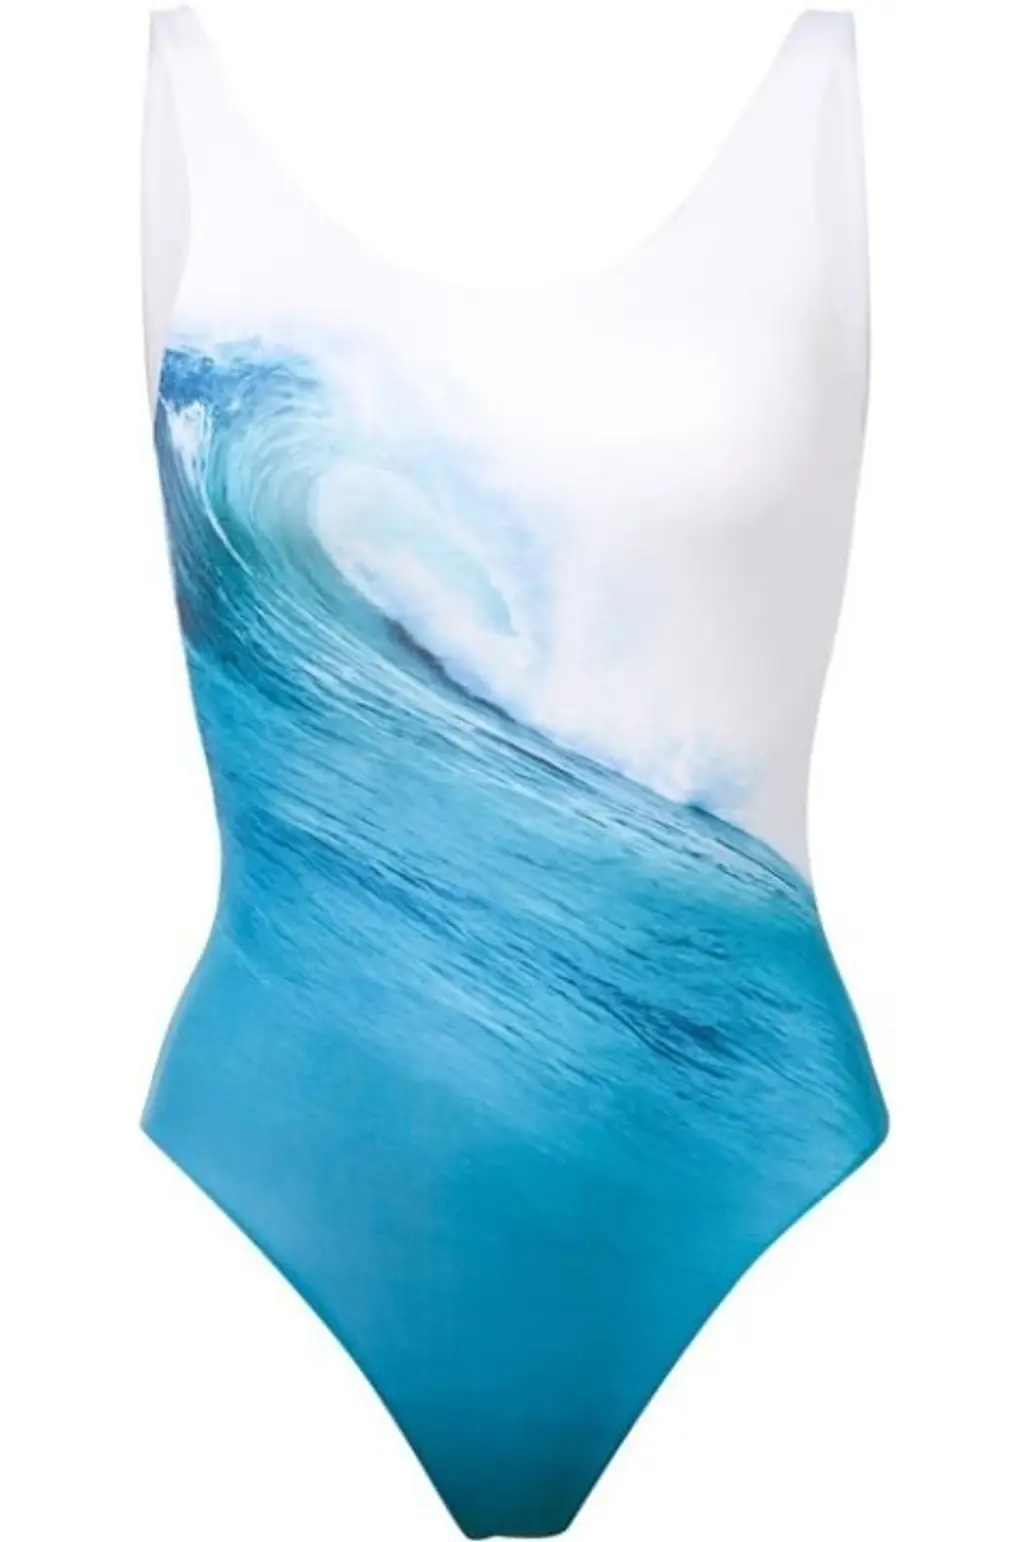 clothing, one piece swimsuit, blue, turquoise, swimwear,